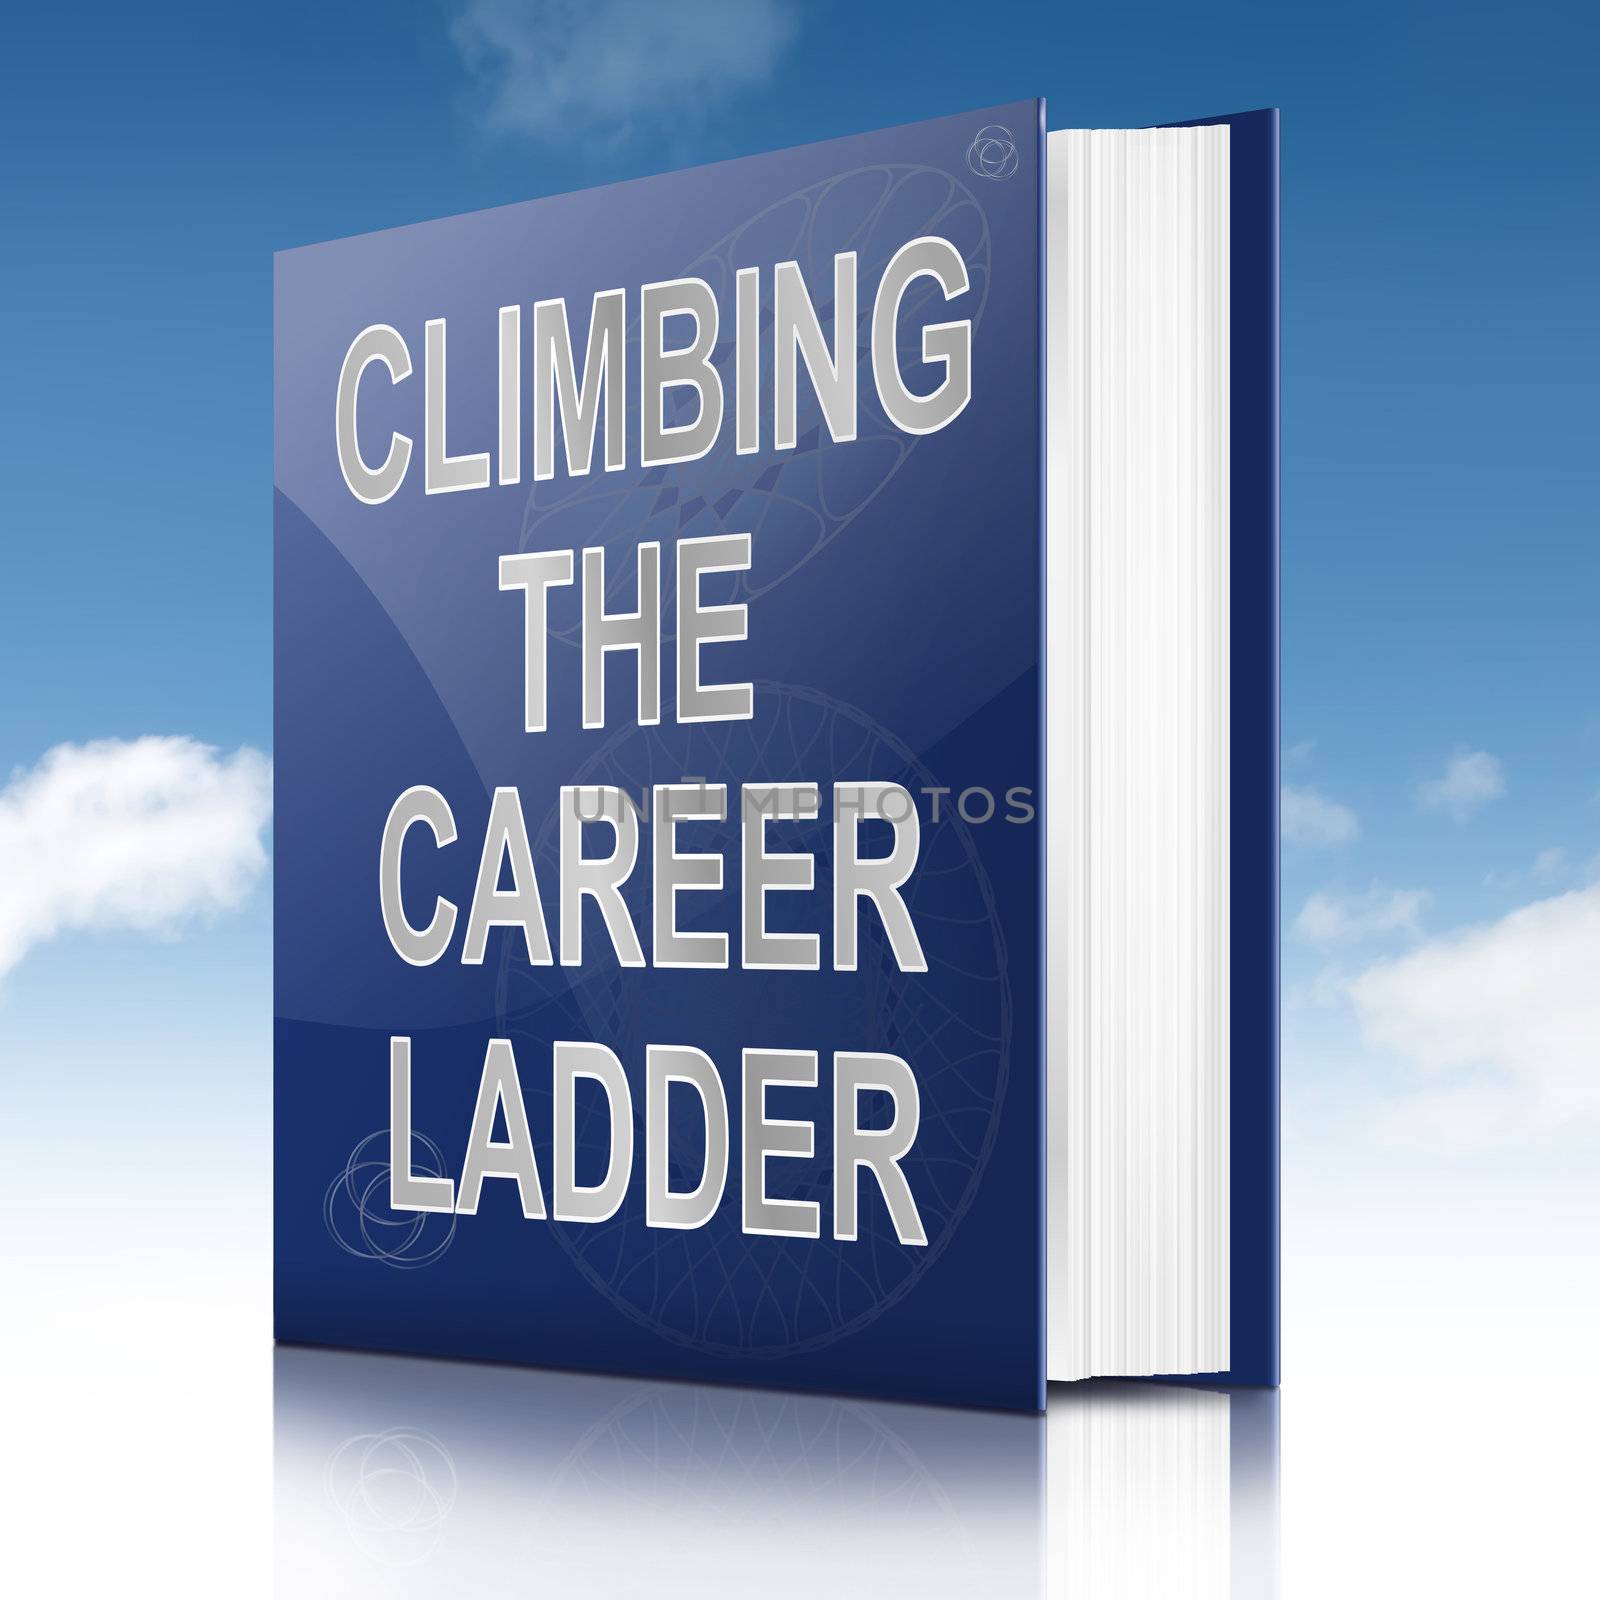 Career ladder concept. by 72soul